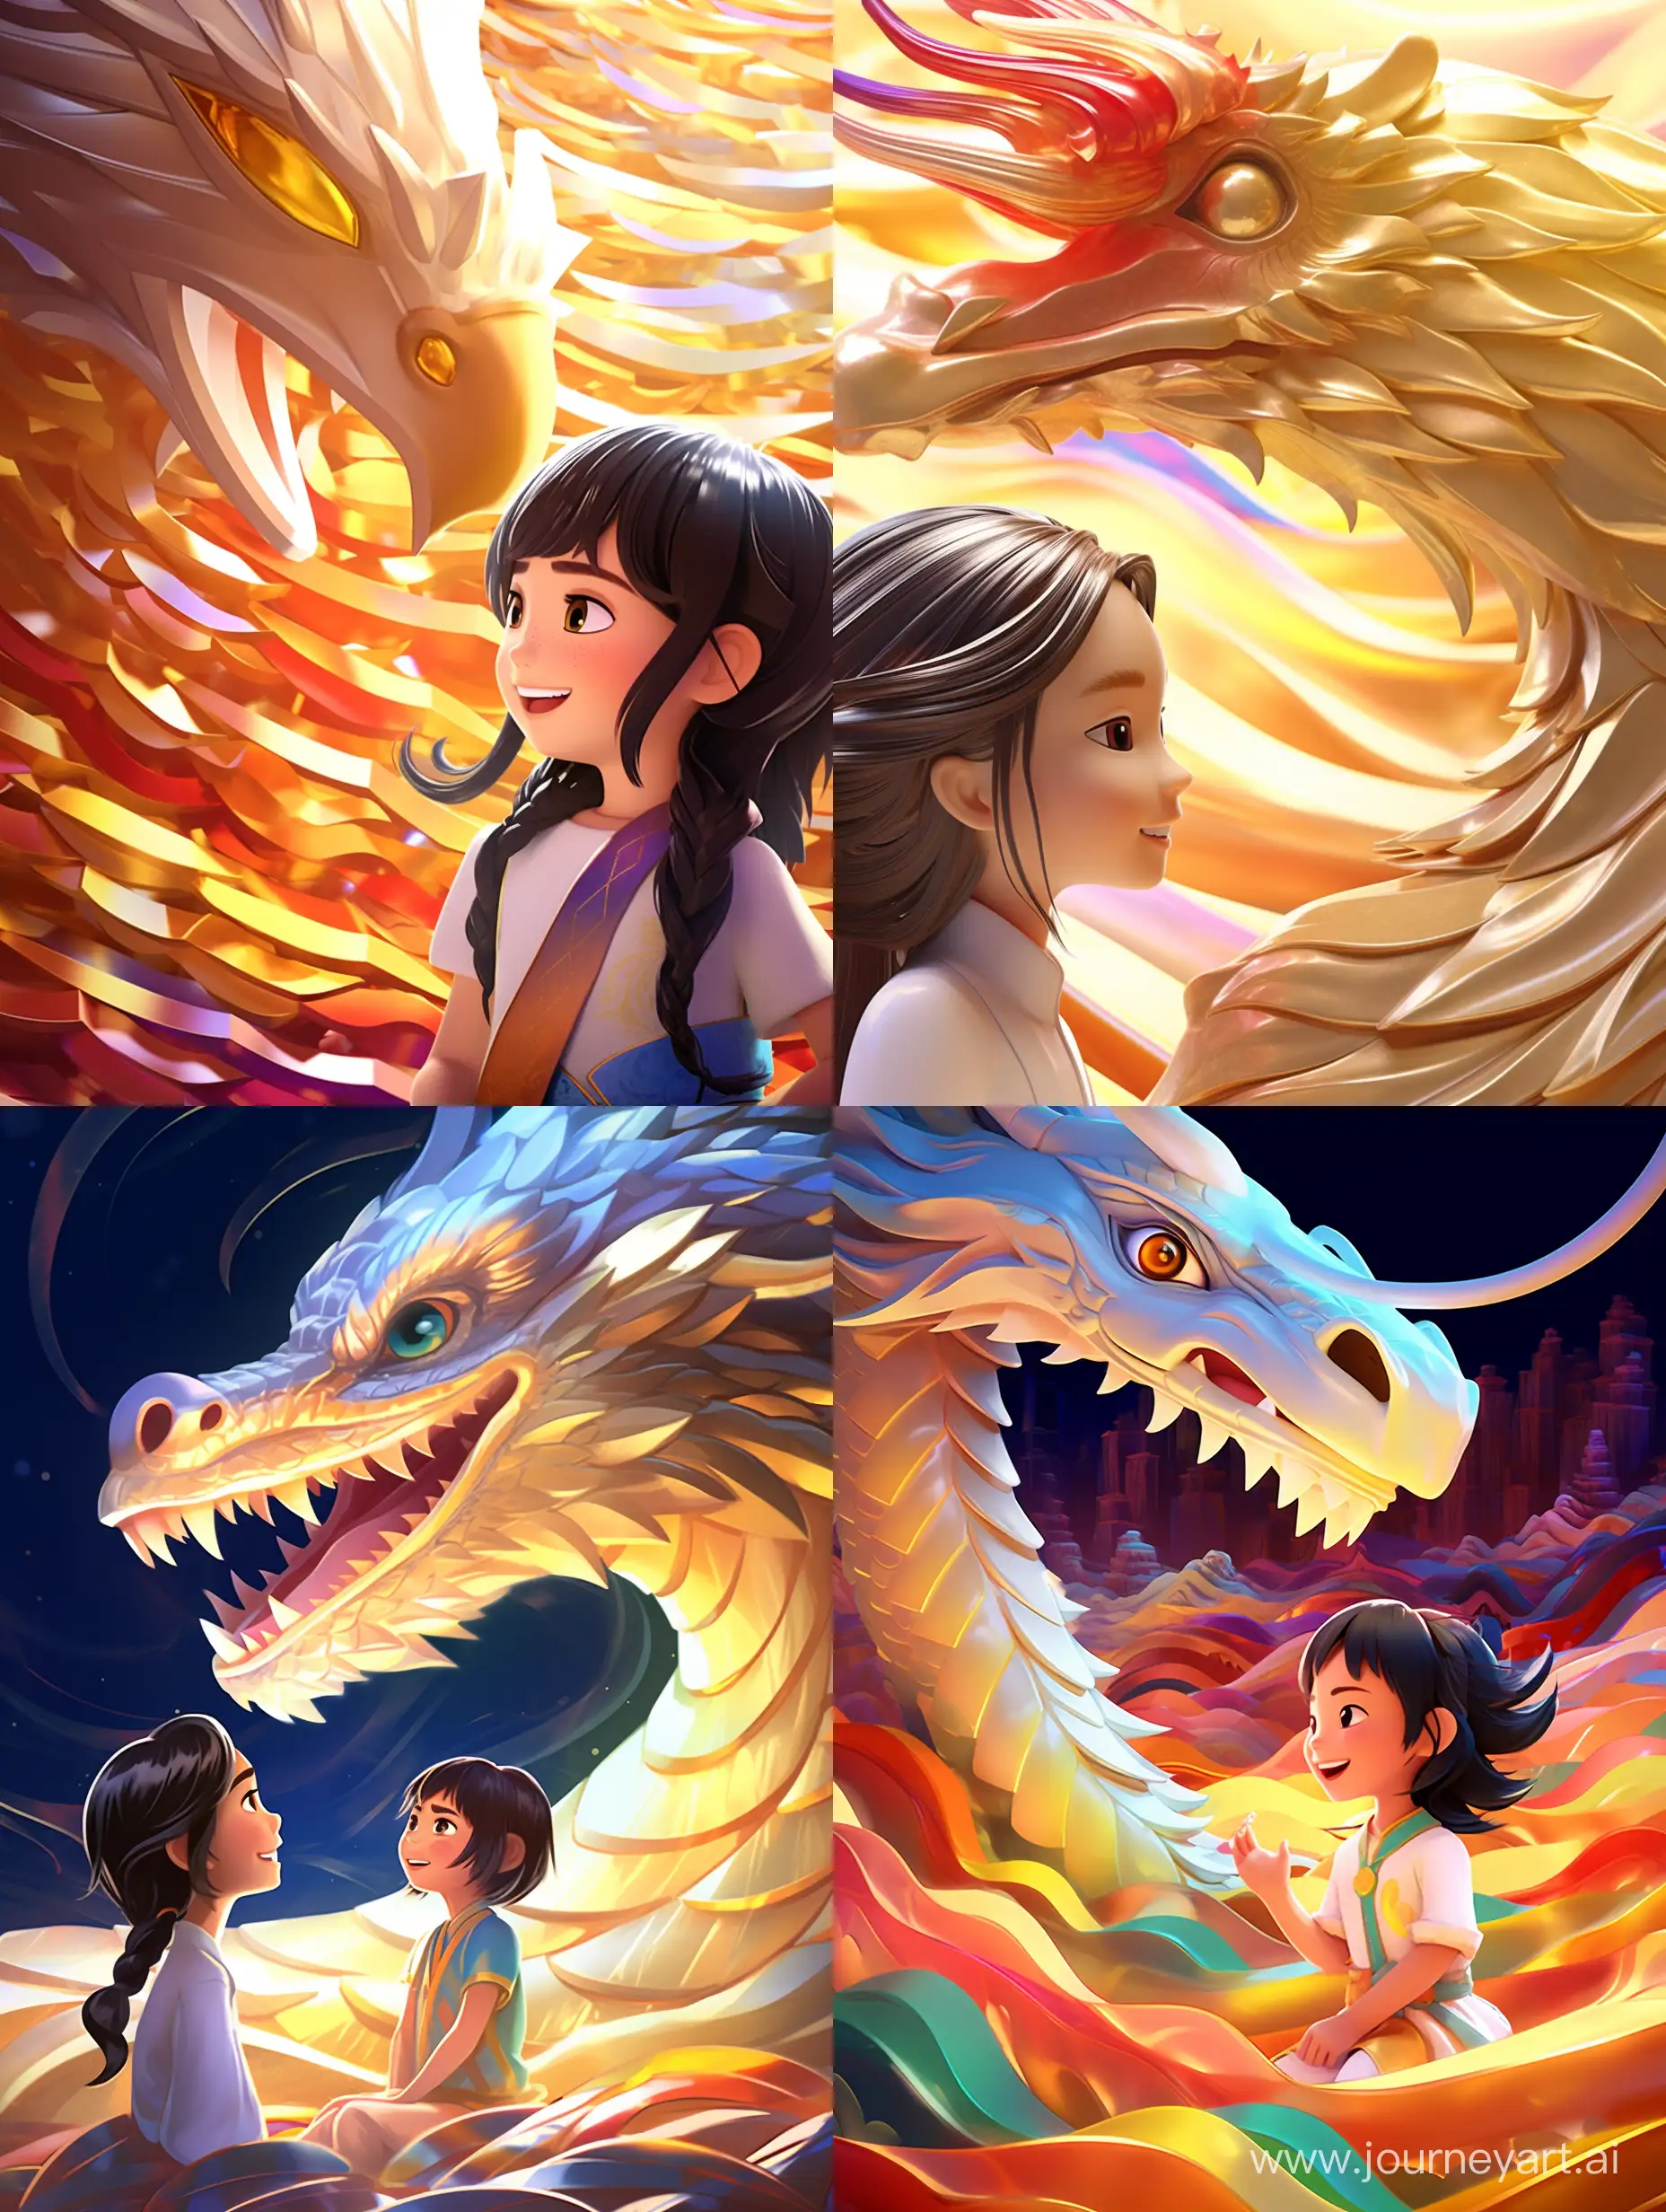 Enchanting-Encounter-Adorable-Chinese-Girl-and-Platinum-Dragon-in-Cinematic-Splendor